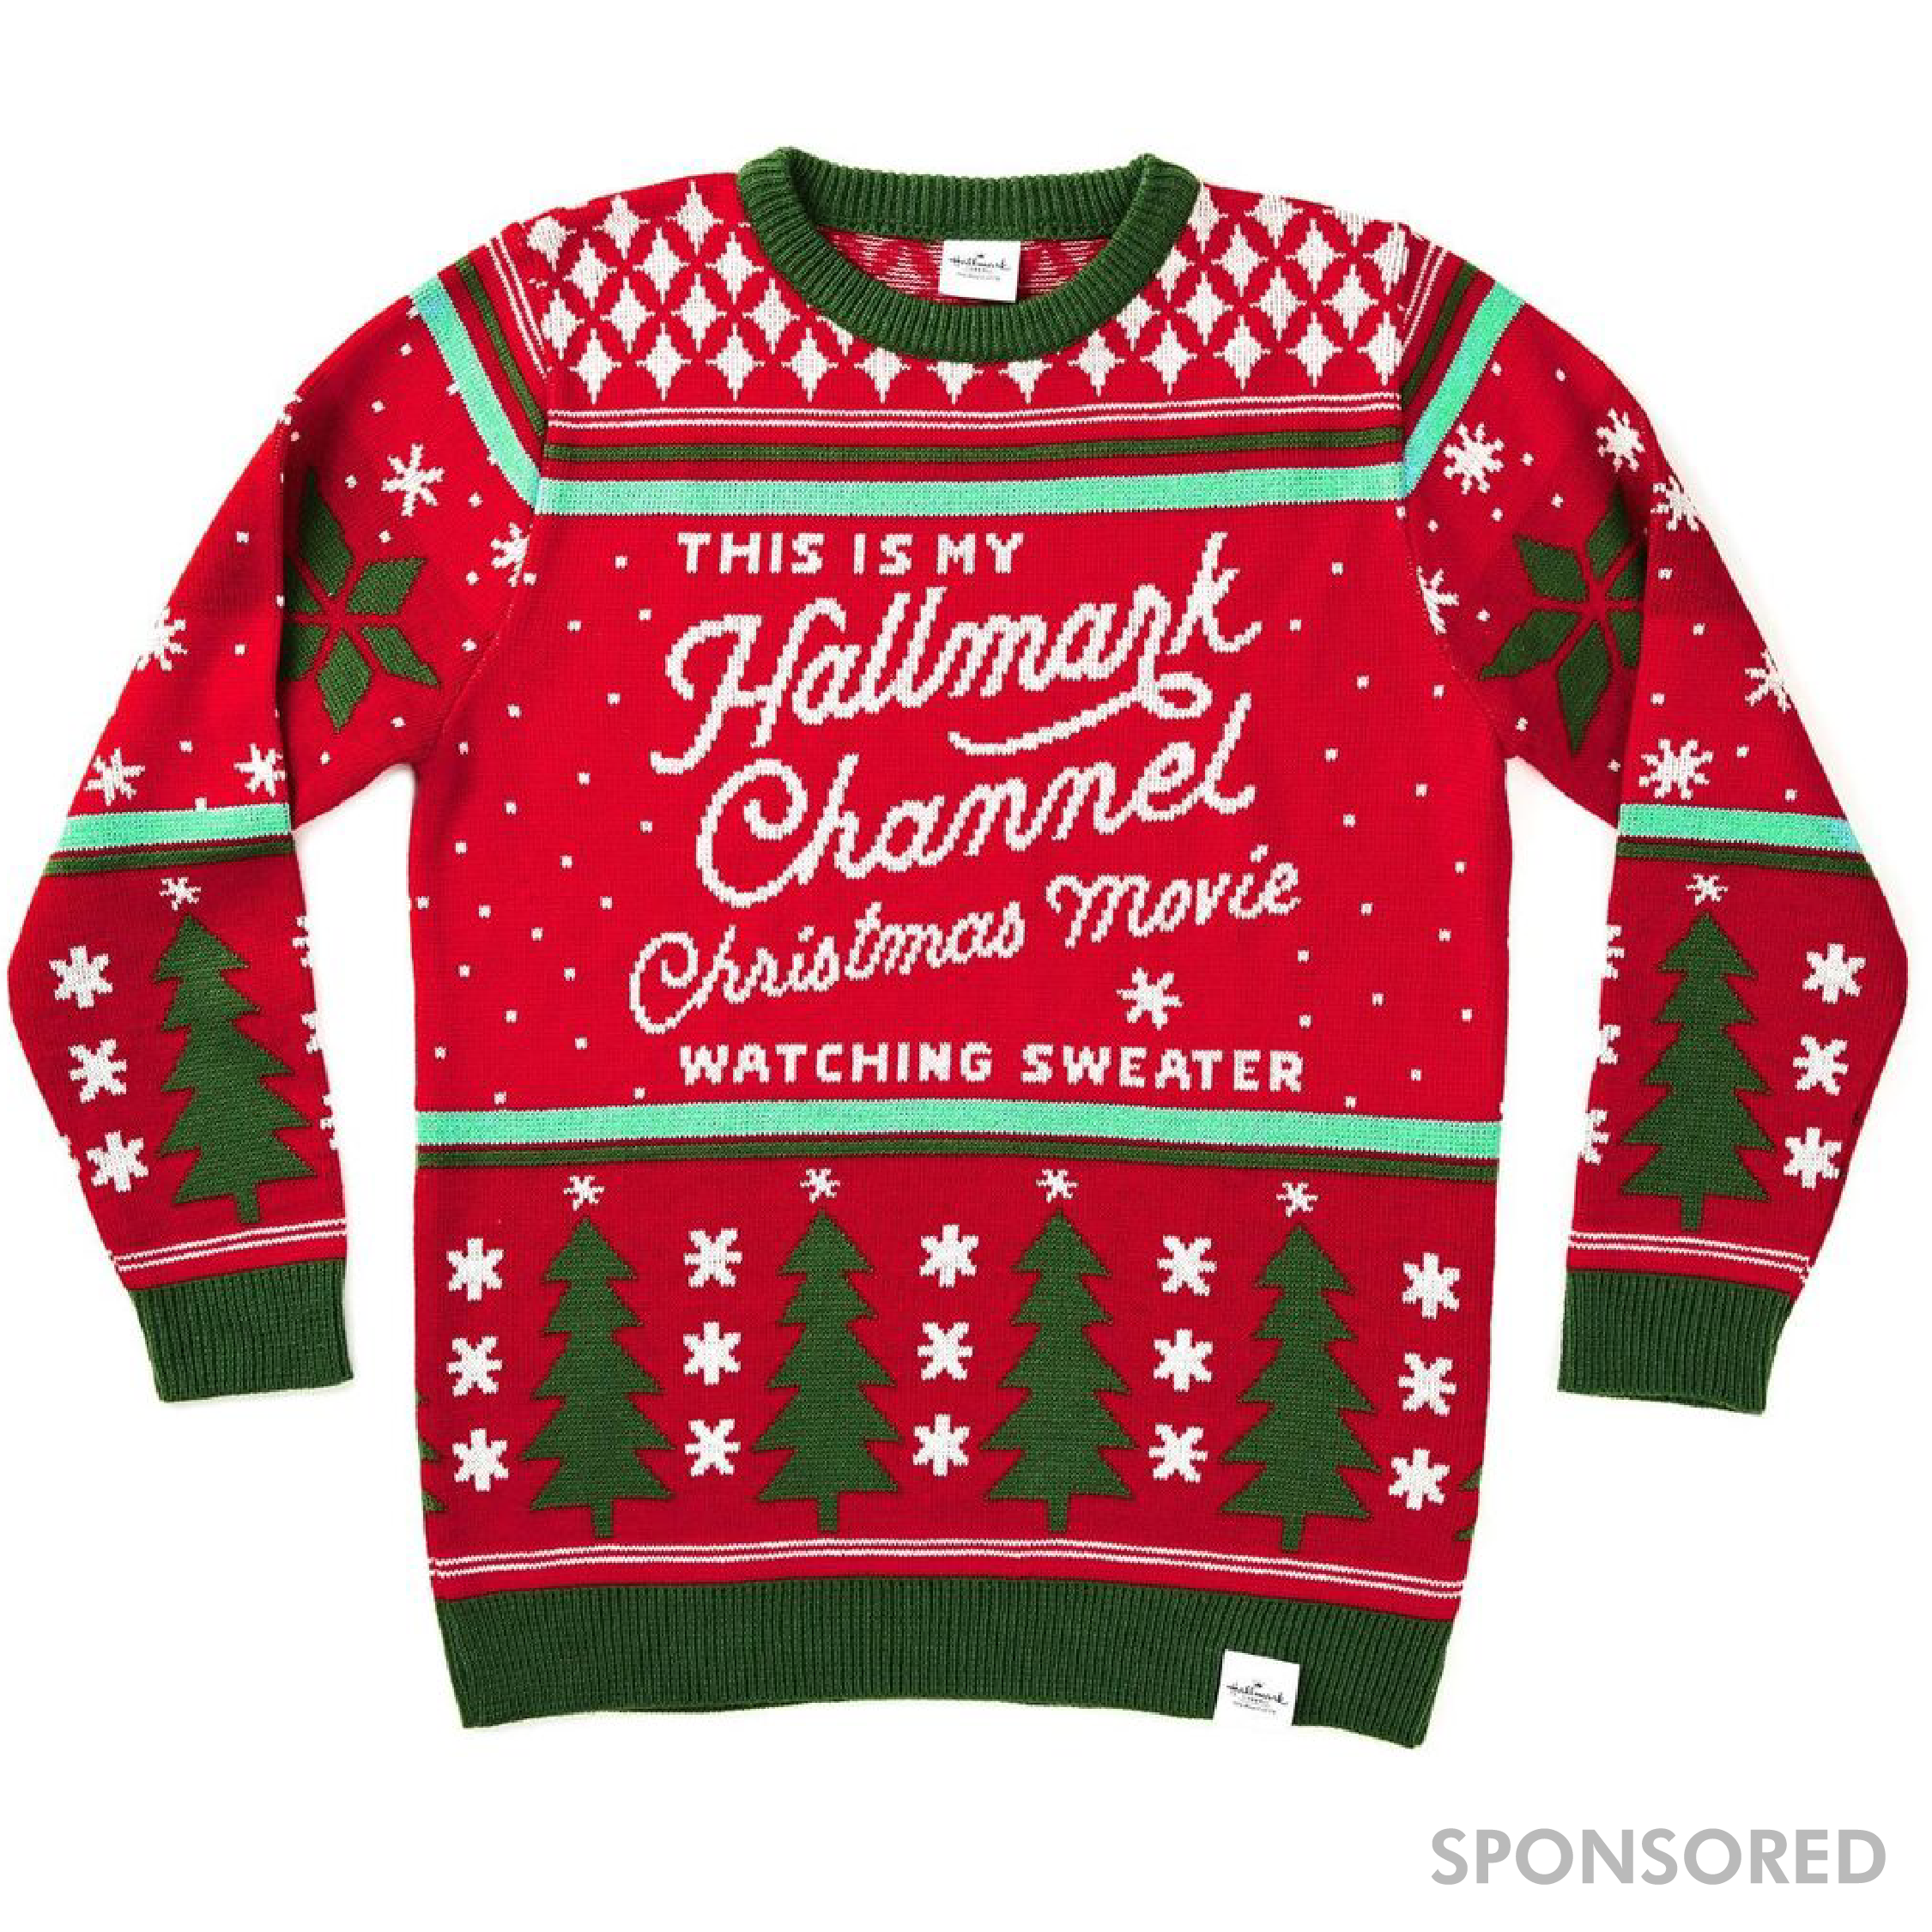 Hallmark Channel Christmas Sweaters